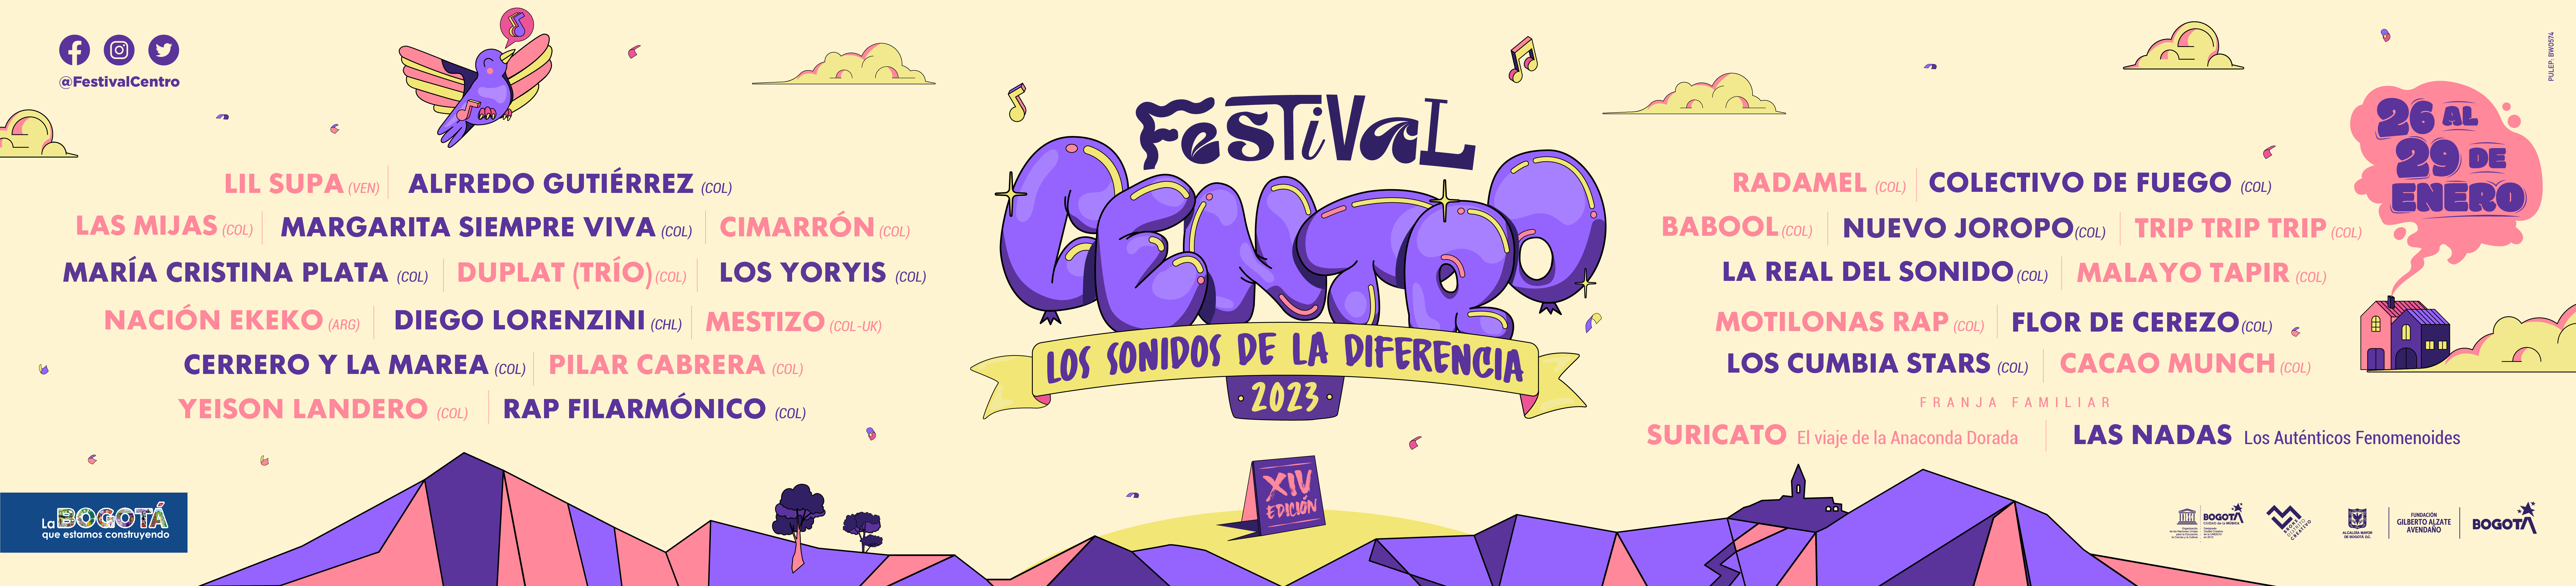 Cartel Festival Centro